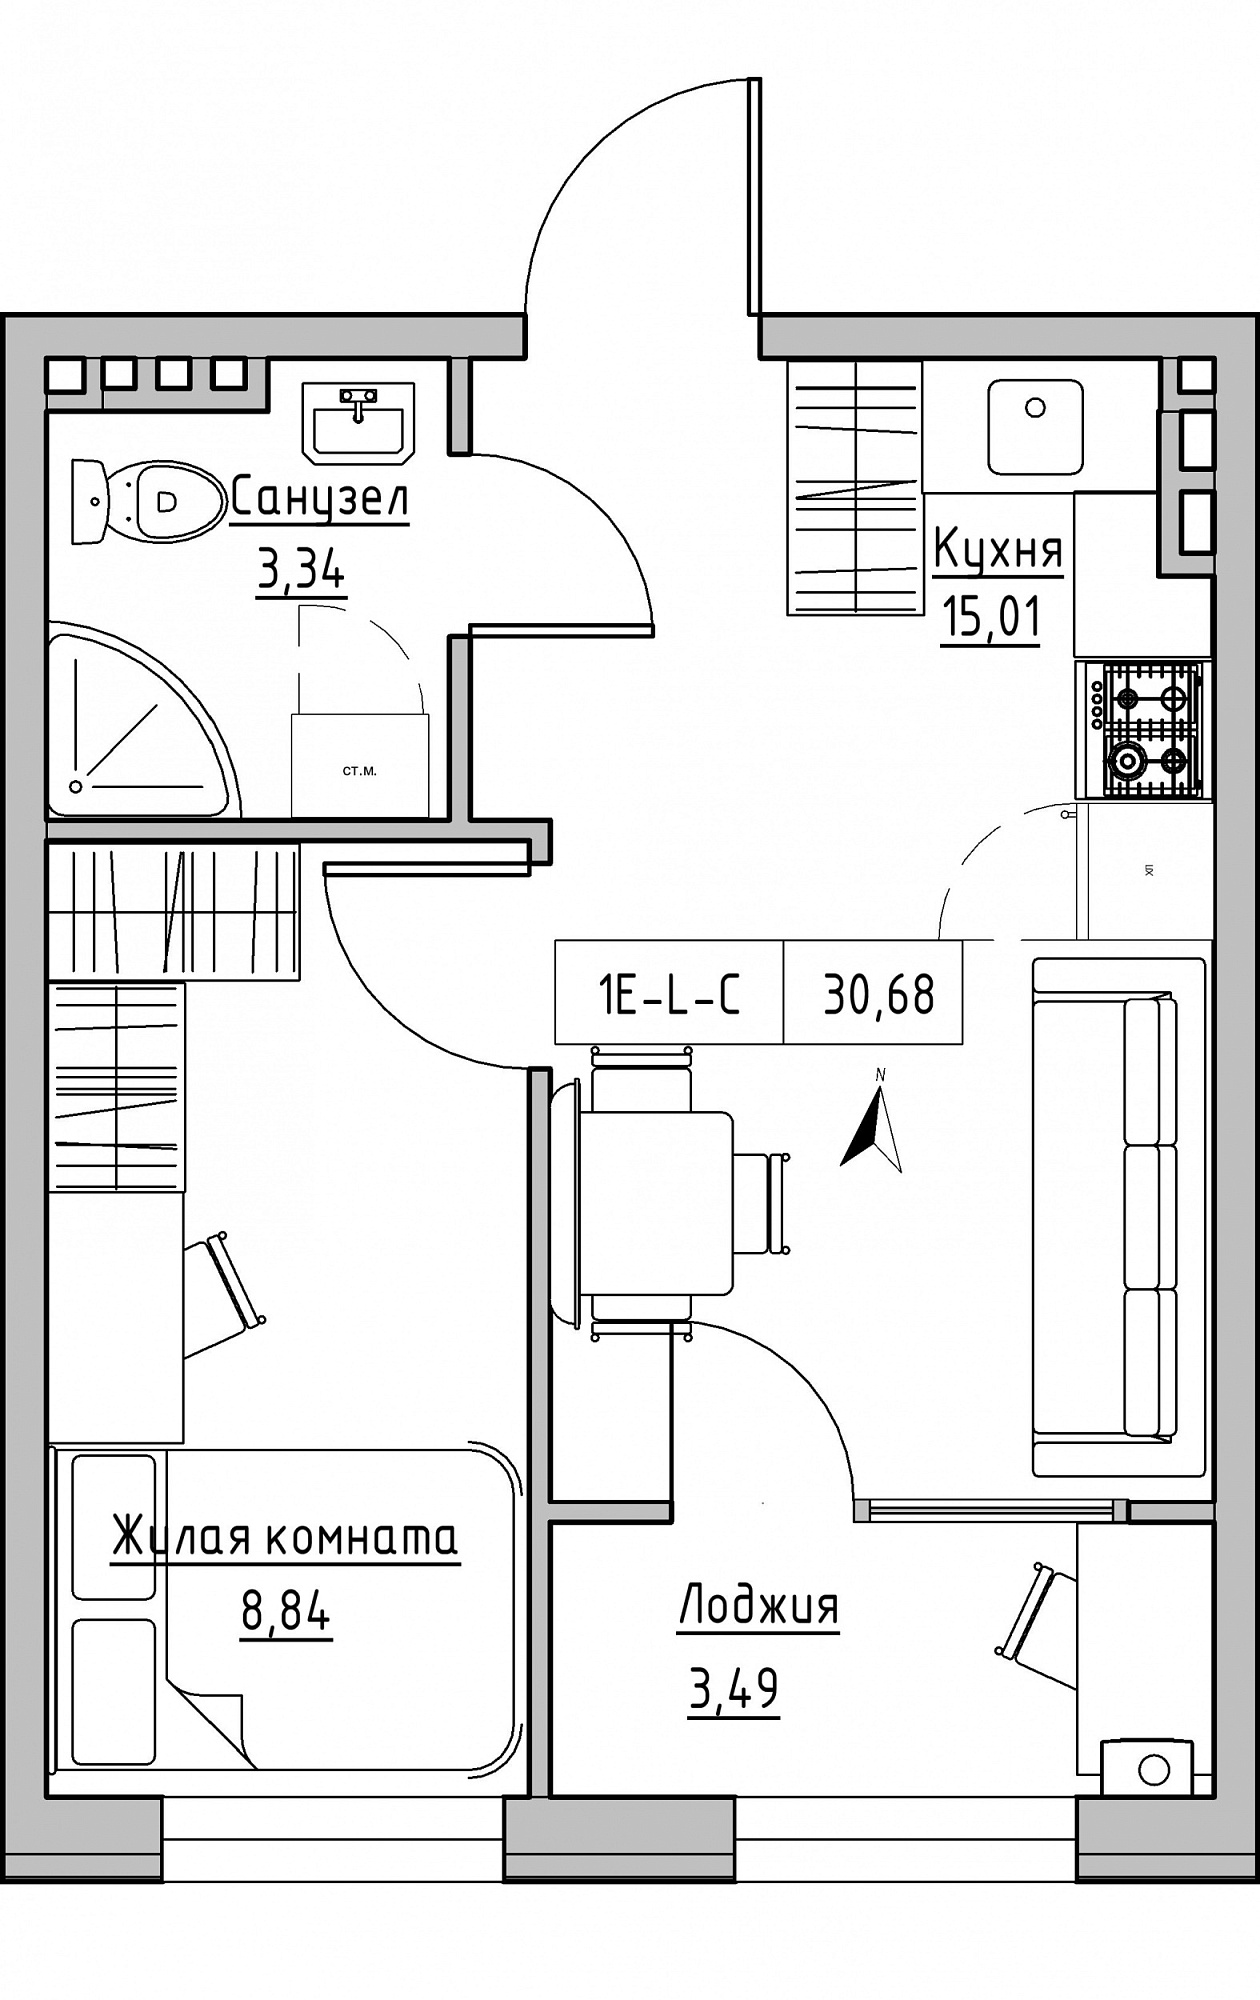 Planning 1-rm flats area 30.68m2, KS-024-03/0008.